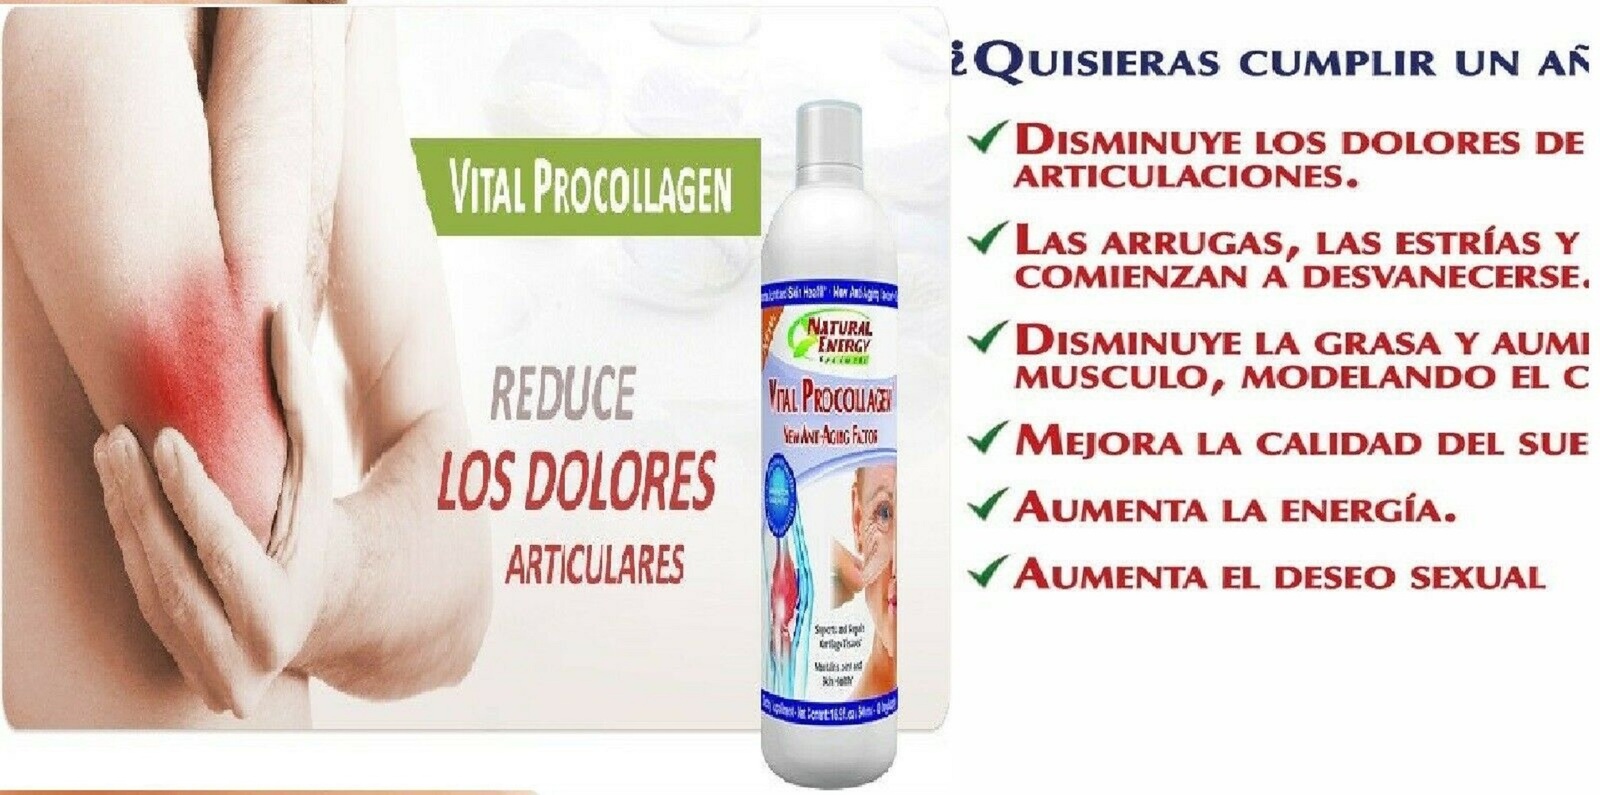 Vital Procollagen 16.9 fl oz. Natural Energy NEW LOOK/FLAVOR pro collagen